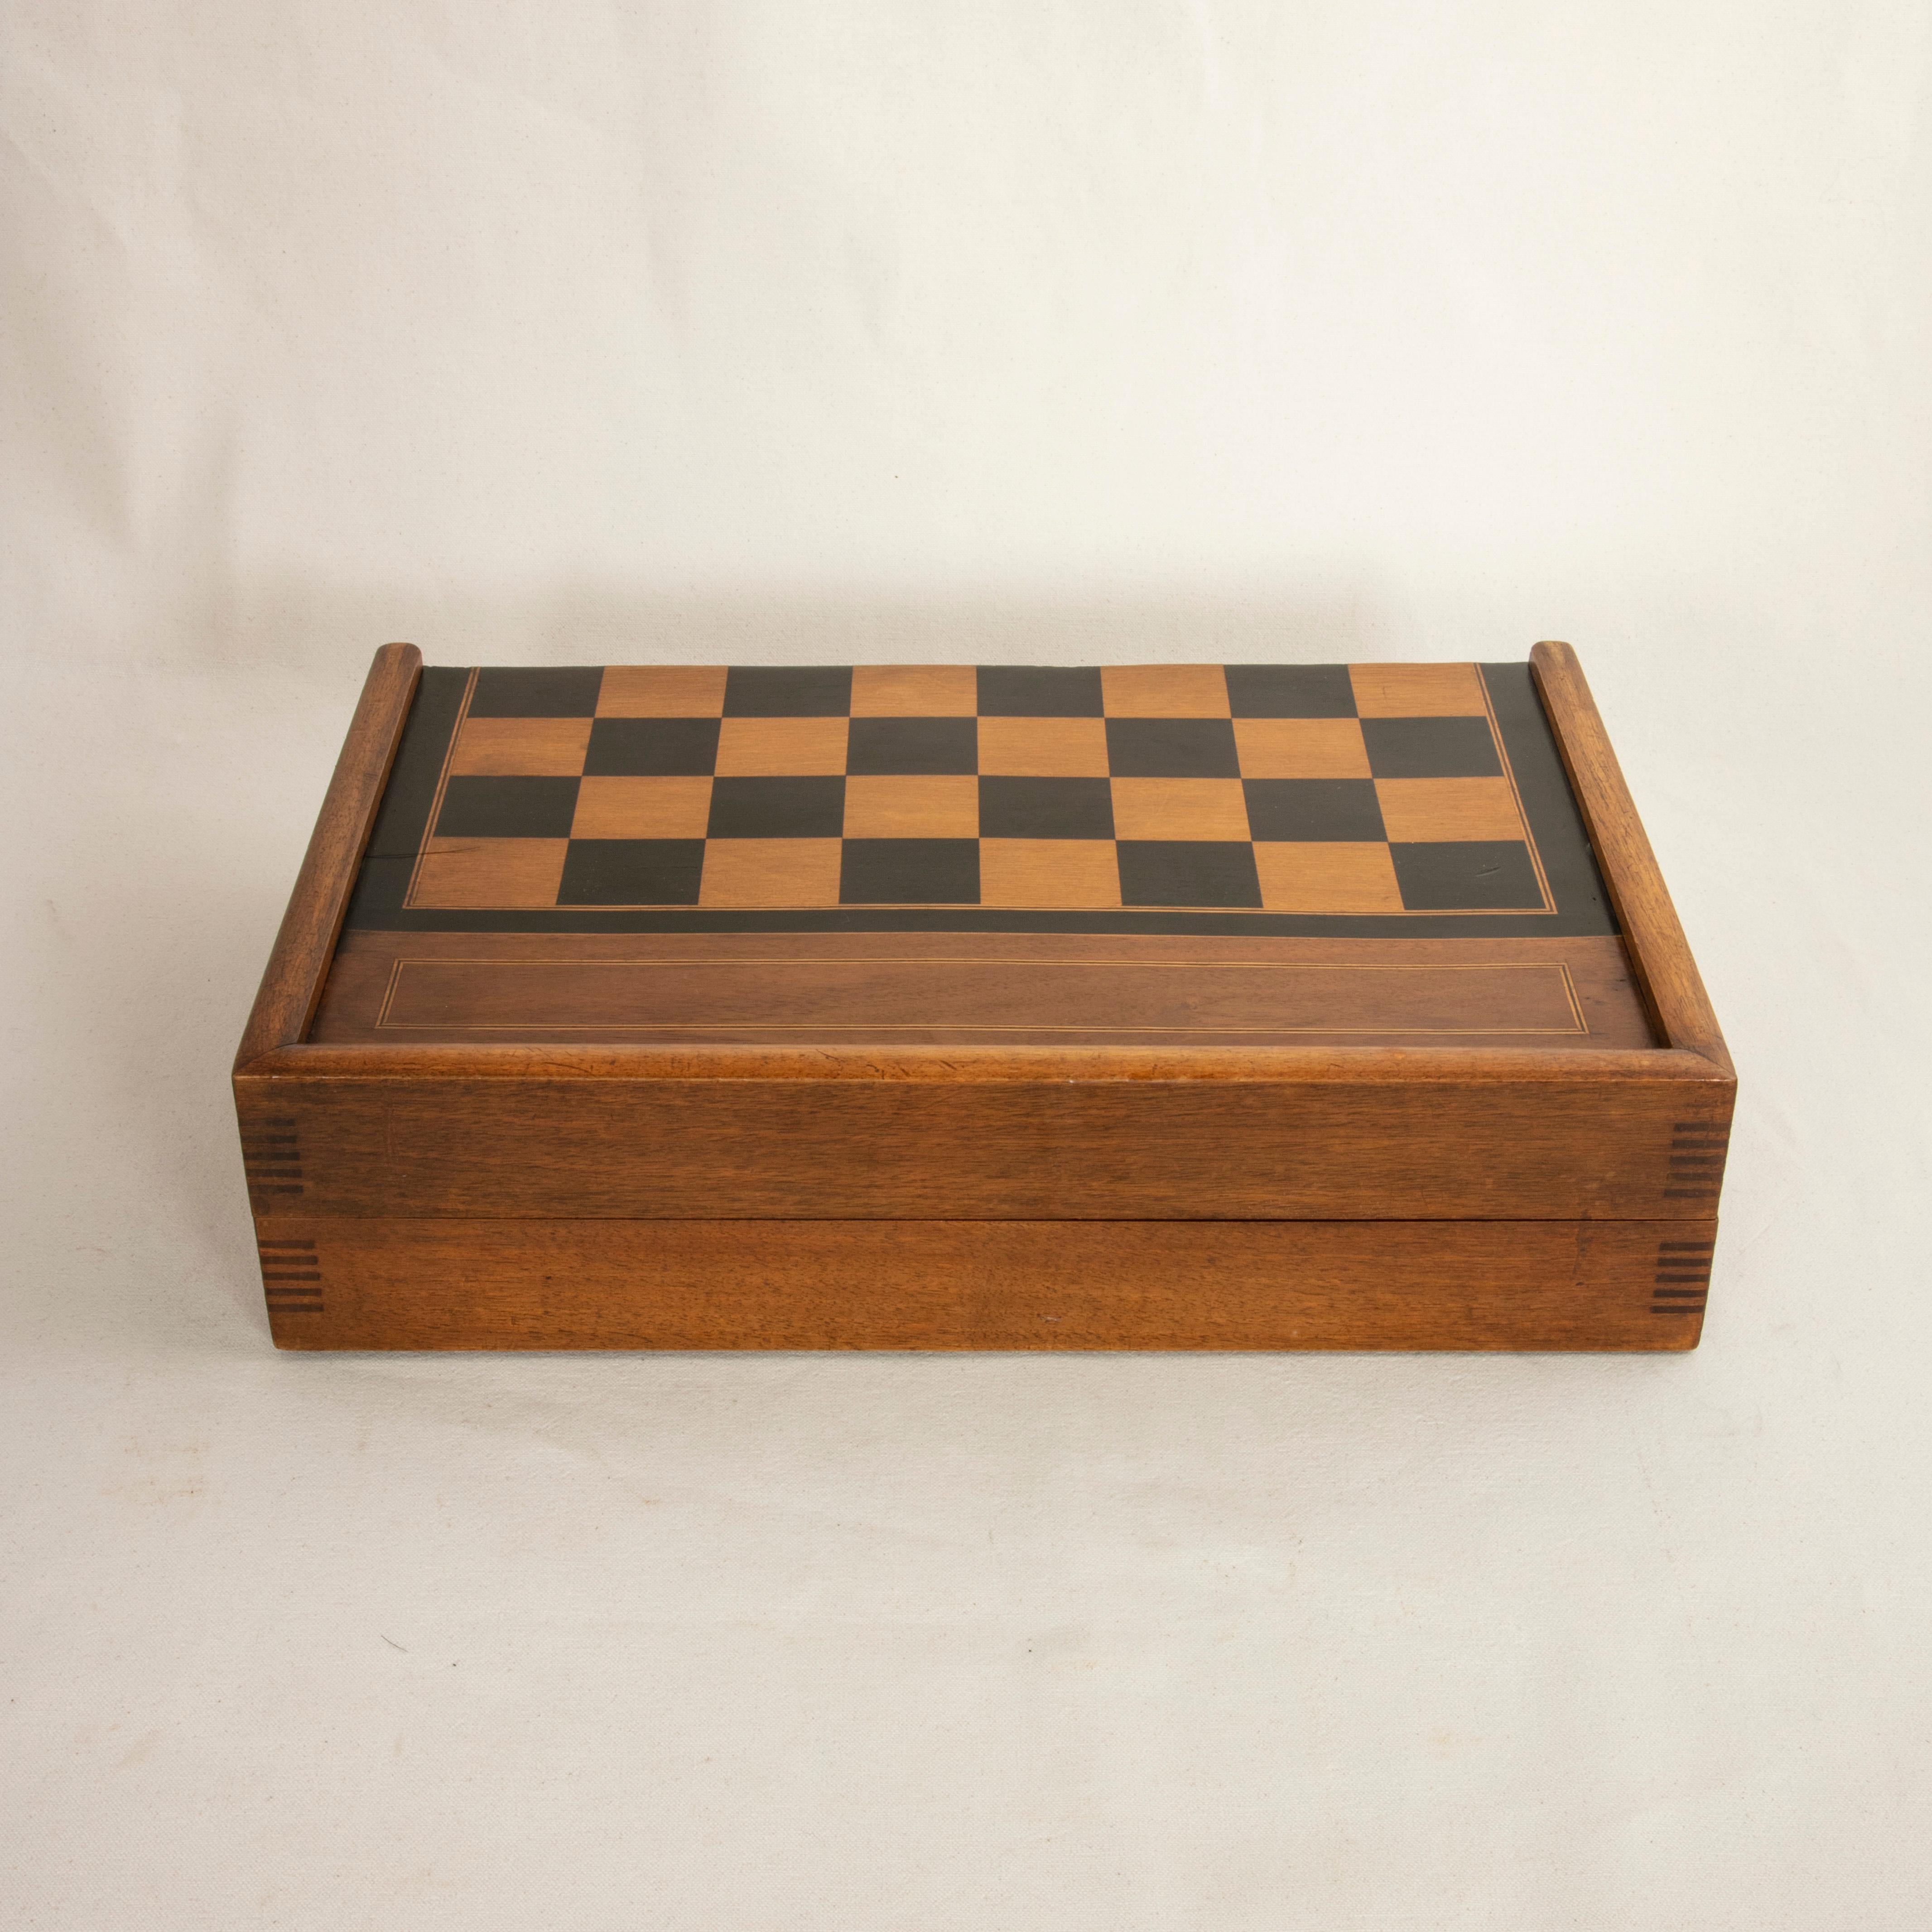 Ebonized Walnut Marquetry Folding Game Box, with Chess, Checkers, Backgammon, circa 1900